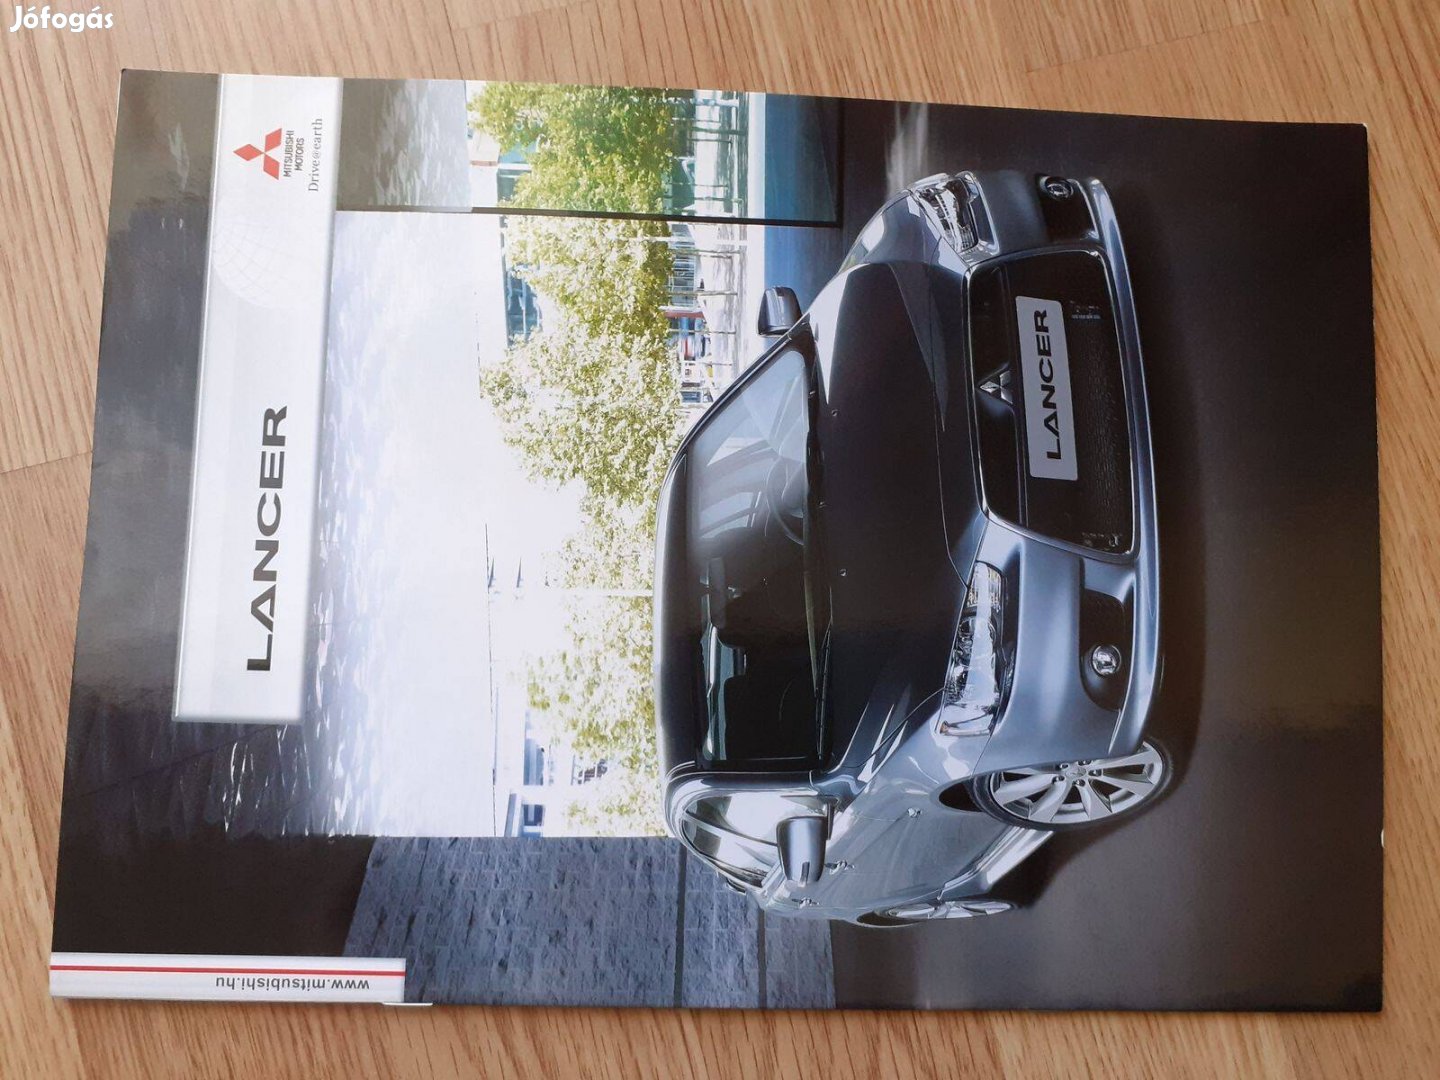 Mitsubishi Lancer prospektus - magyar nyelvű